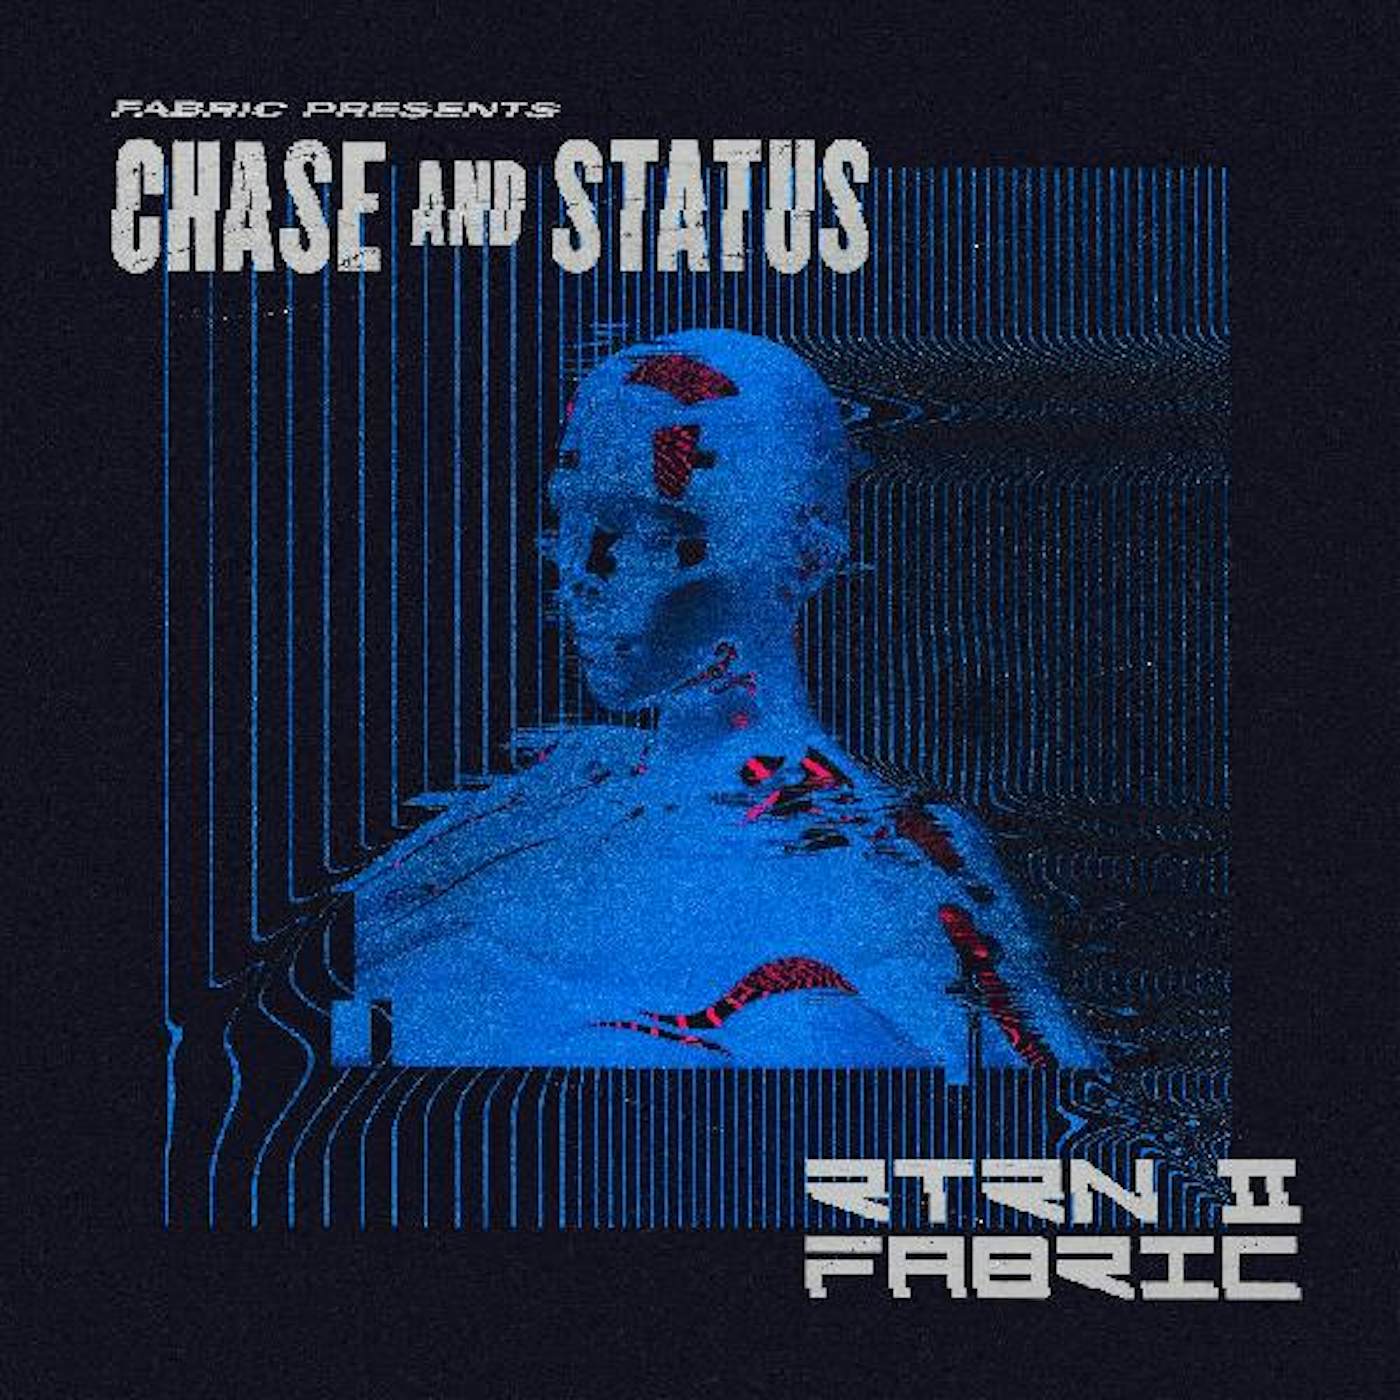 CHASE & STATUS RTRN II FABRIC Vinyl Record